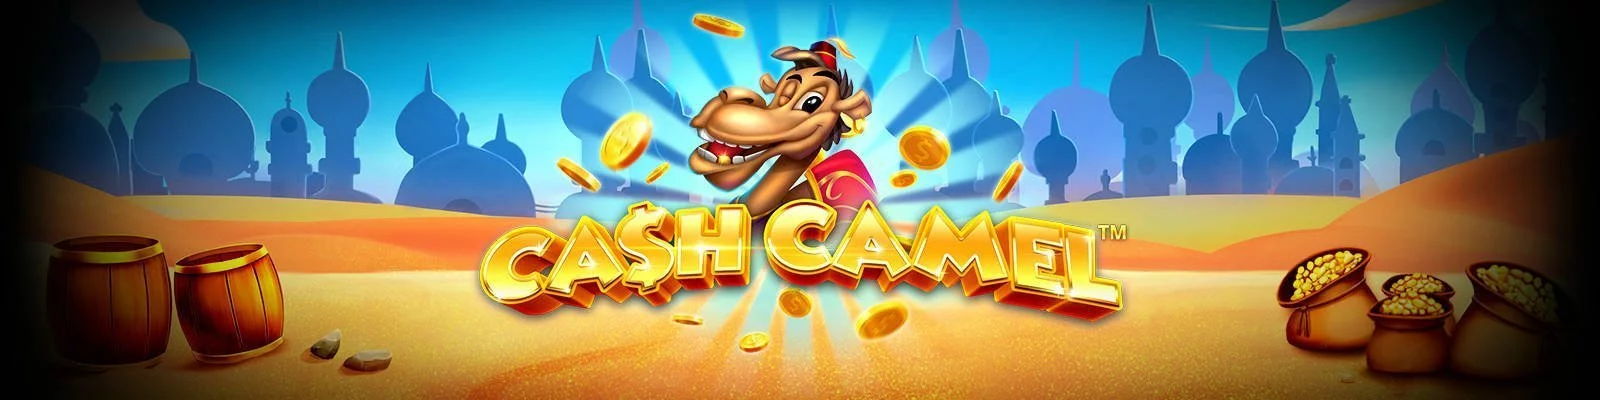 Cash Camel logga